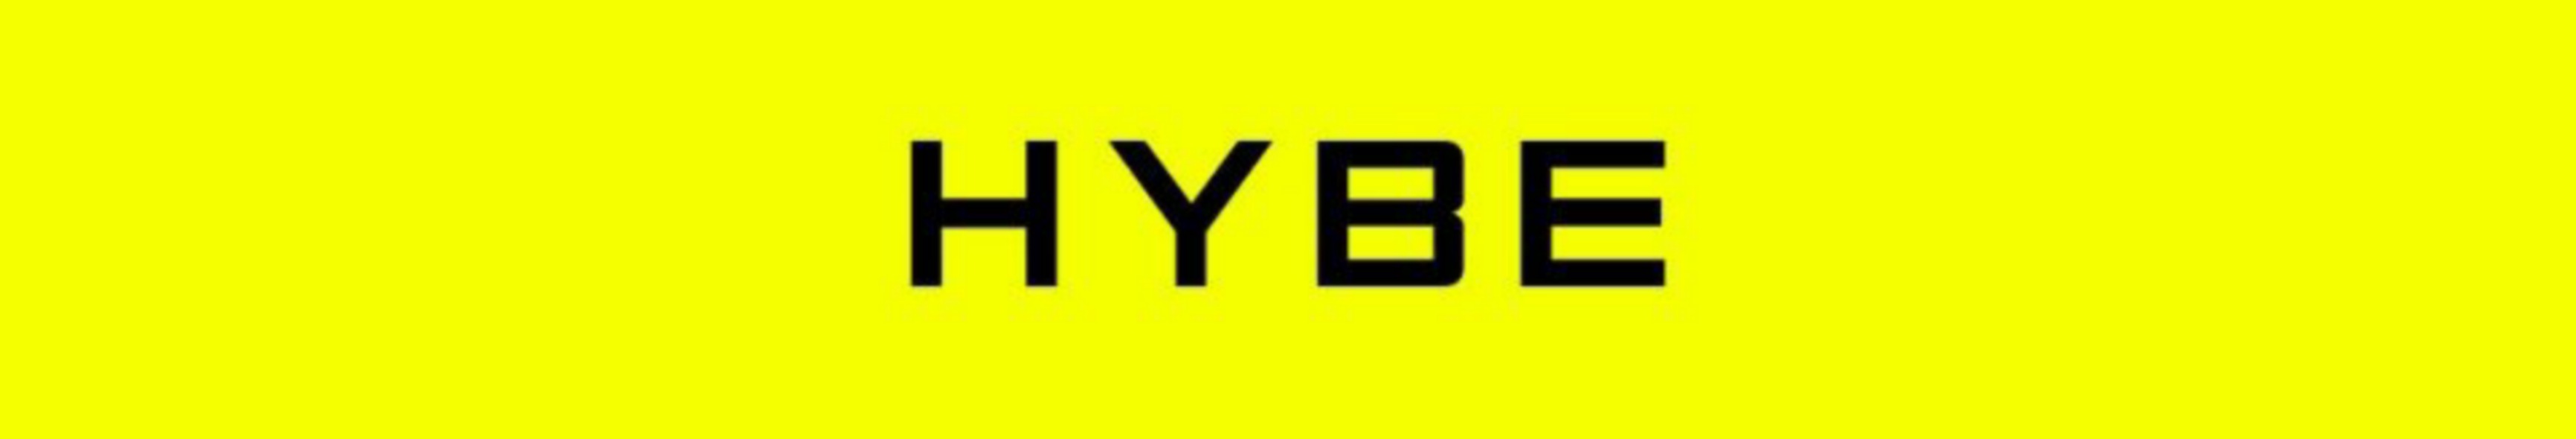 Hybe Labels Logo